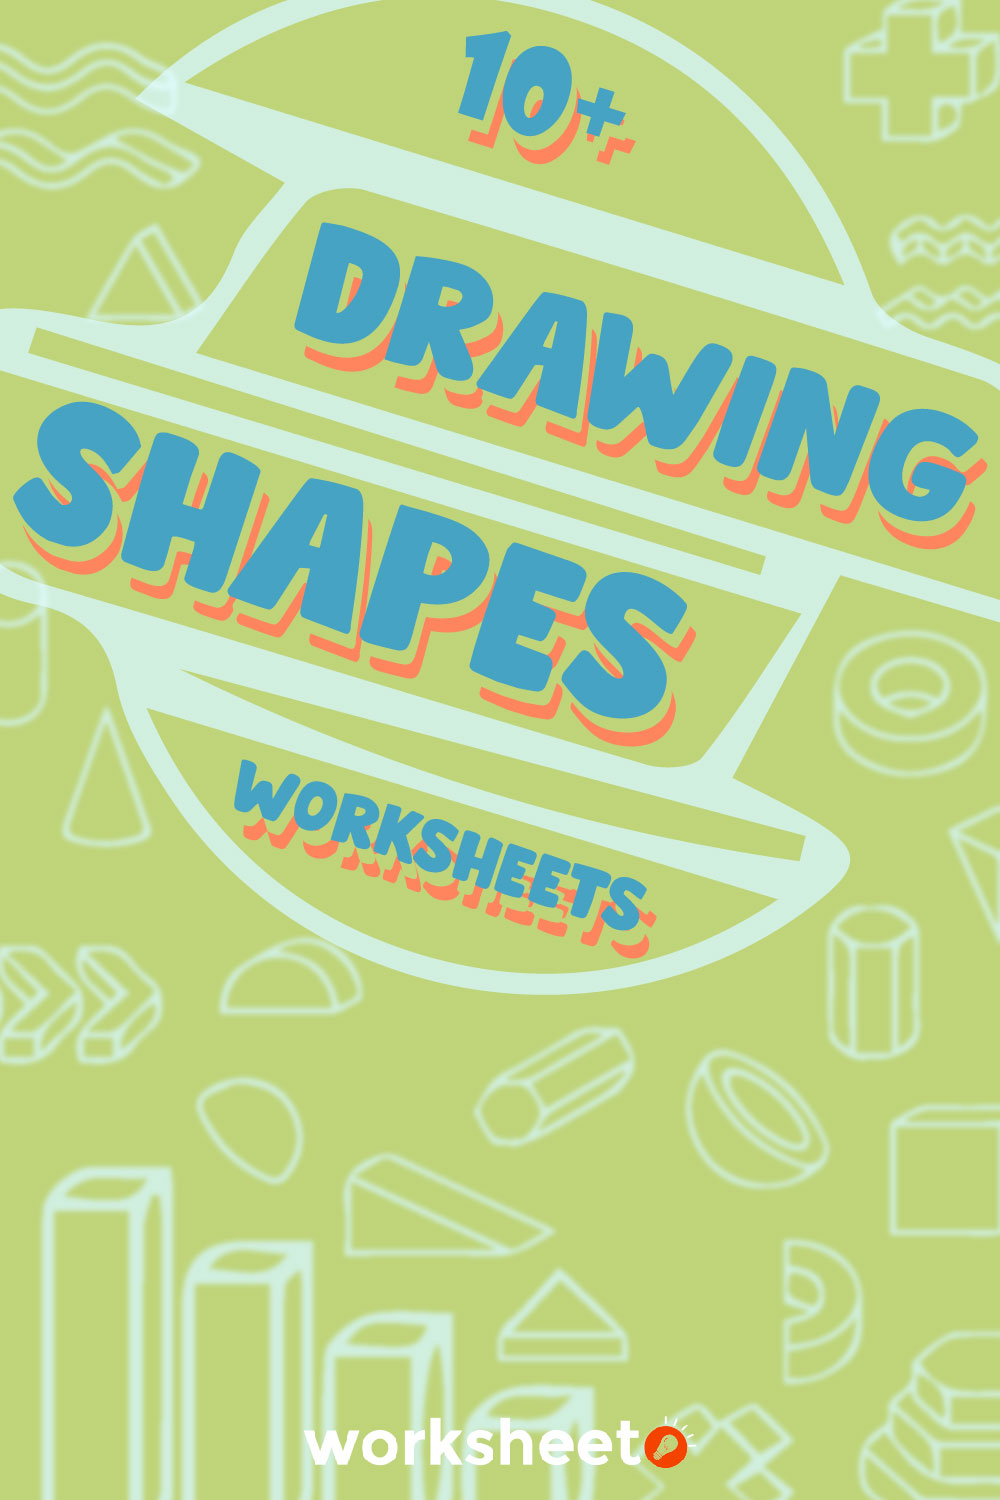 Drawing Shapes Worksheets